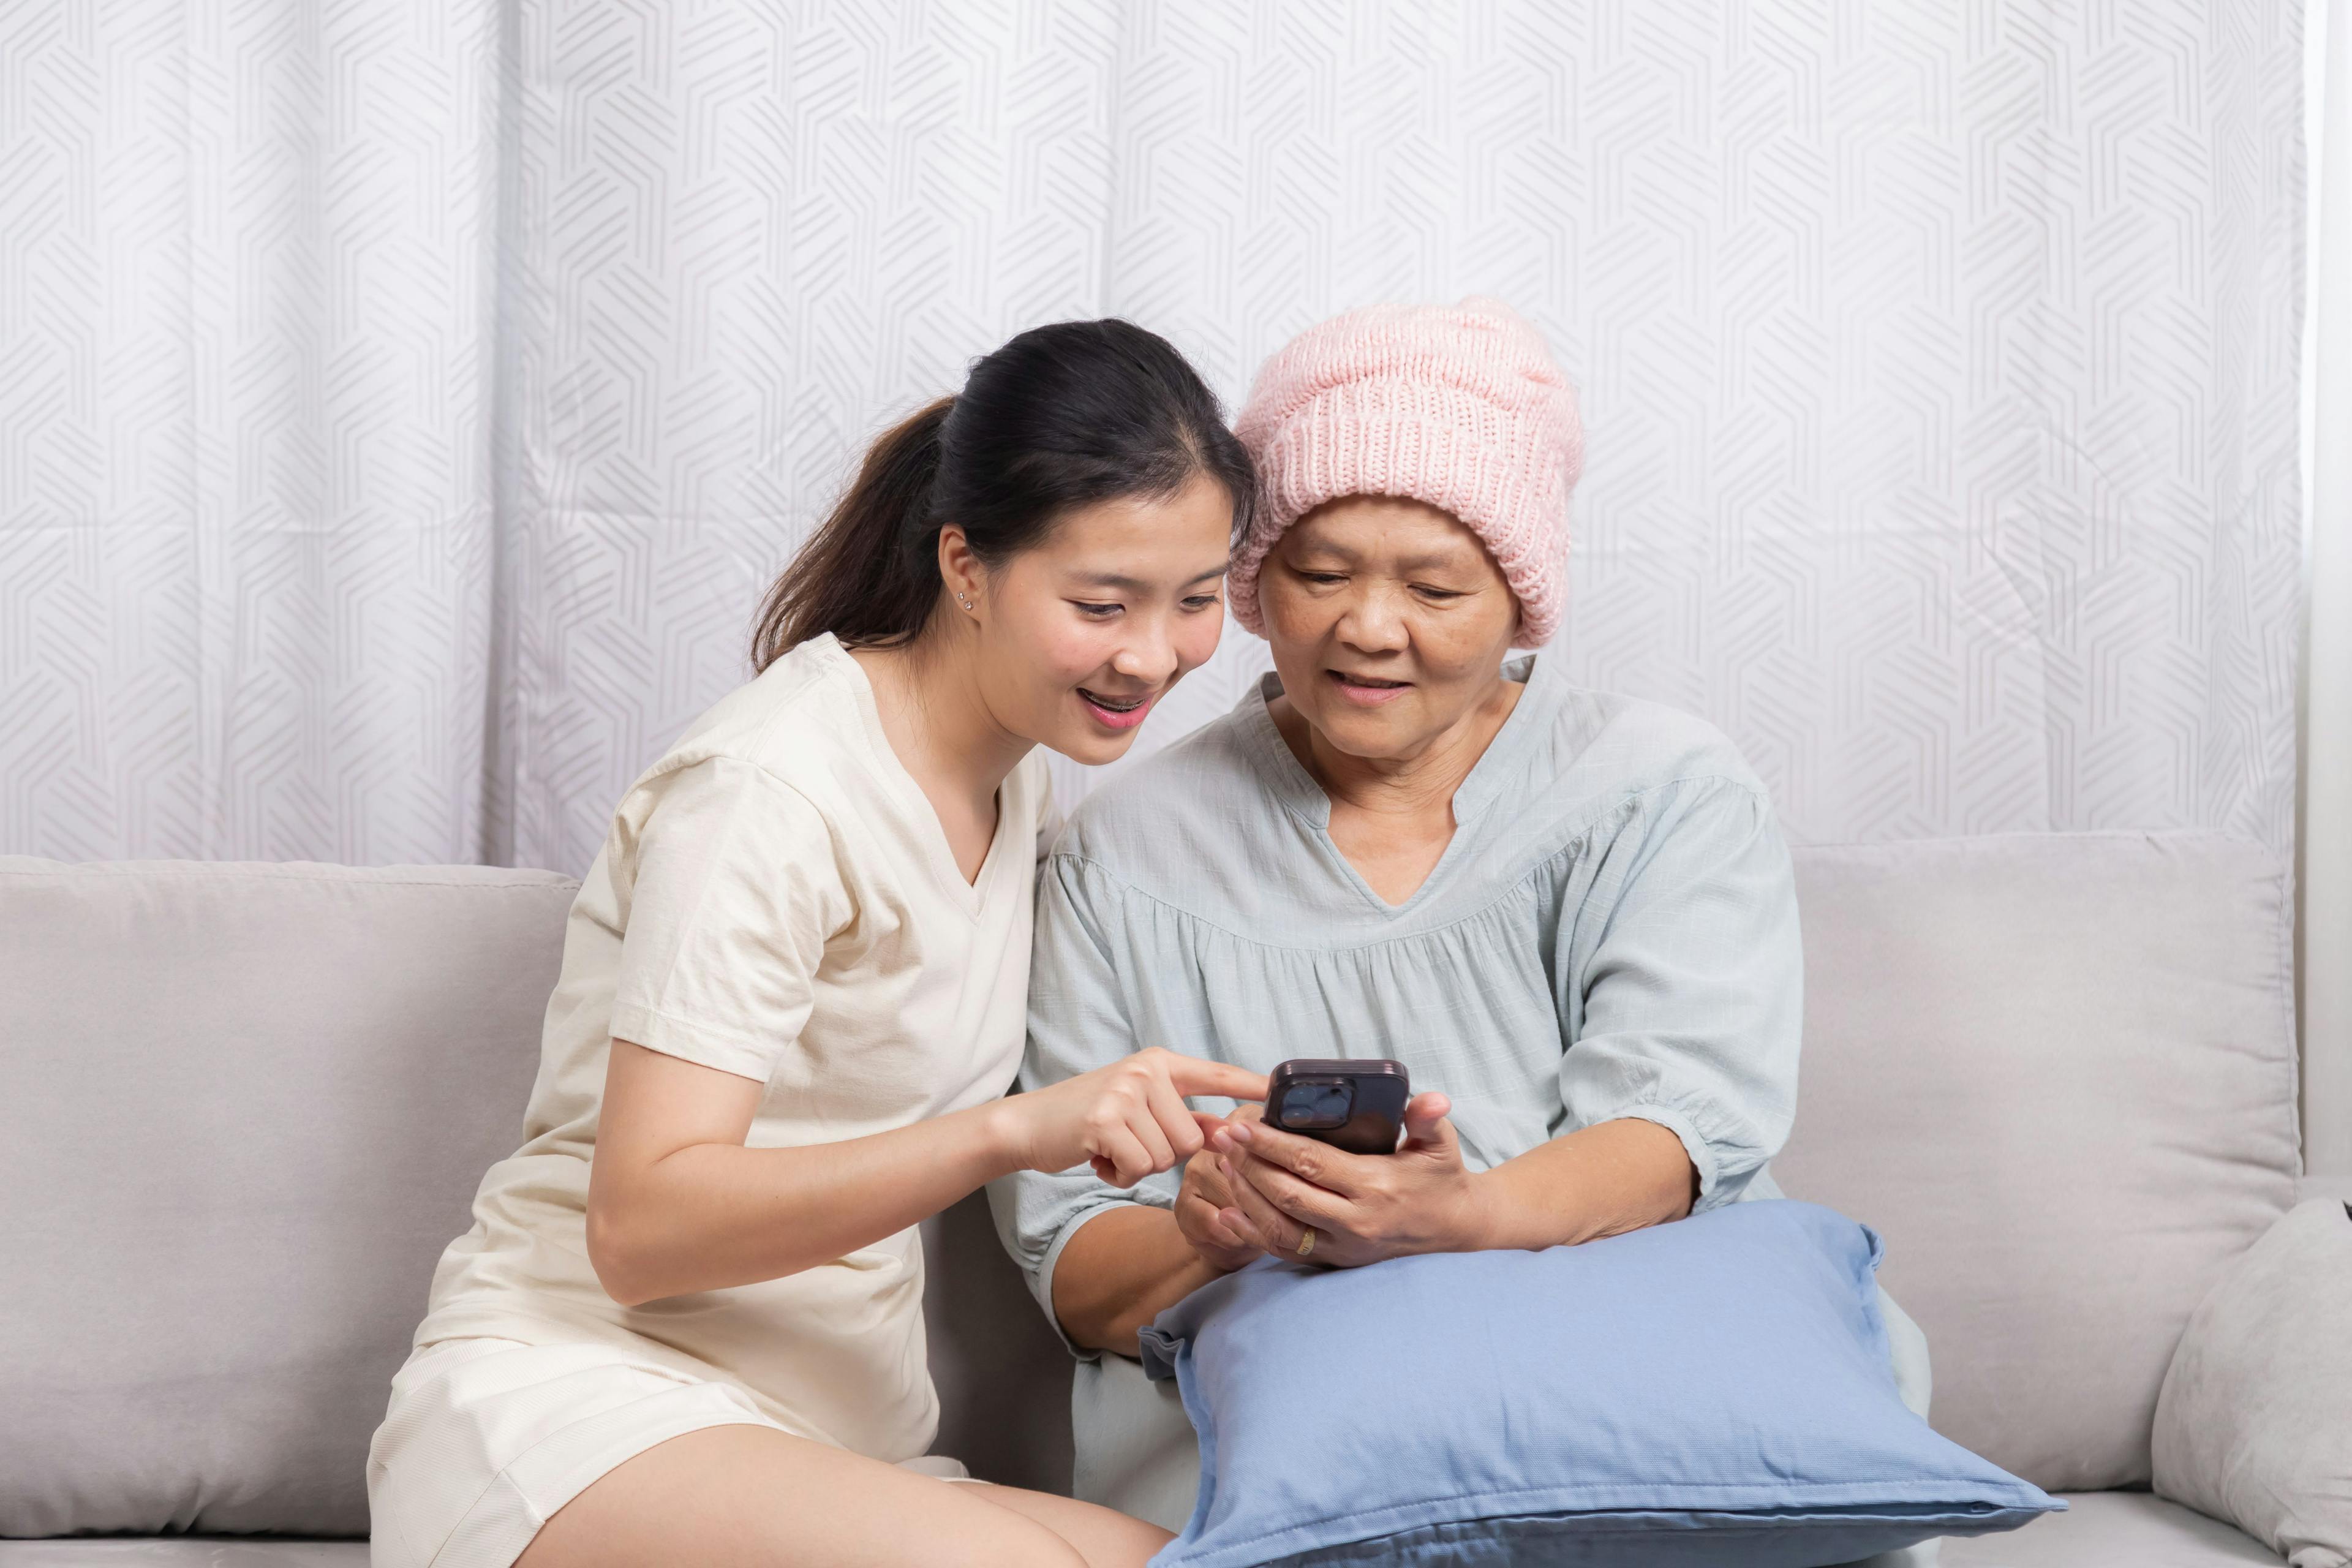 Patient with breast cancer using mobile app to track symptoms. | Image Credit: Rakchanok - stock.adobe.com